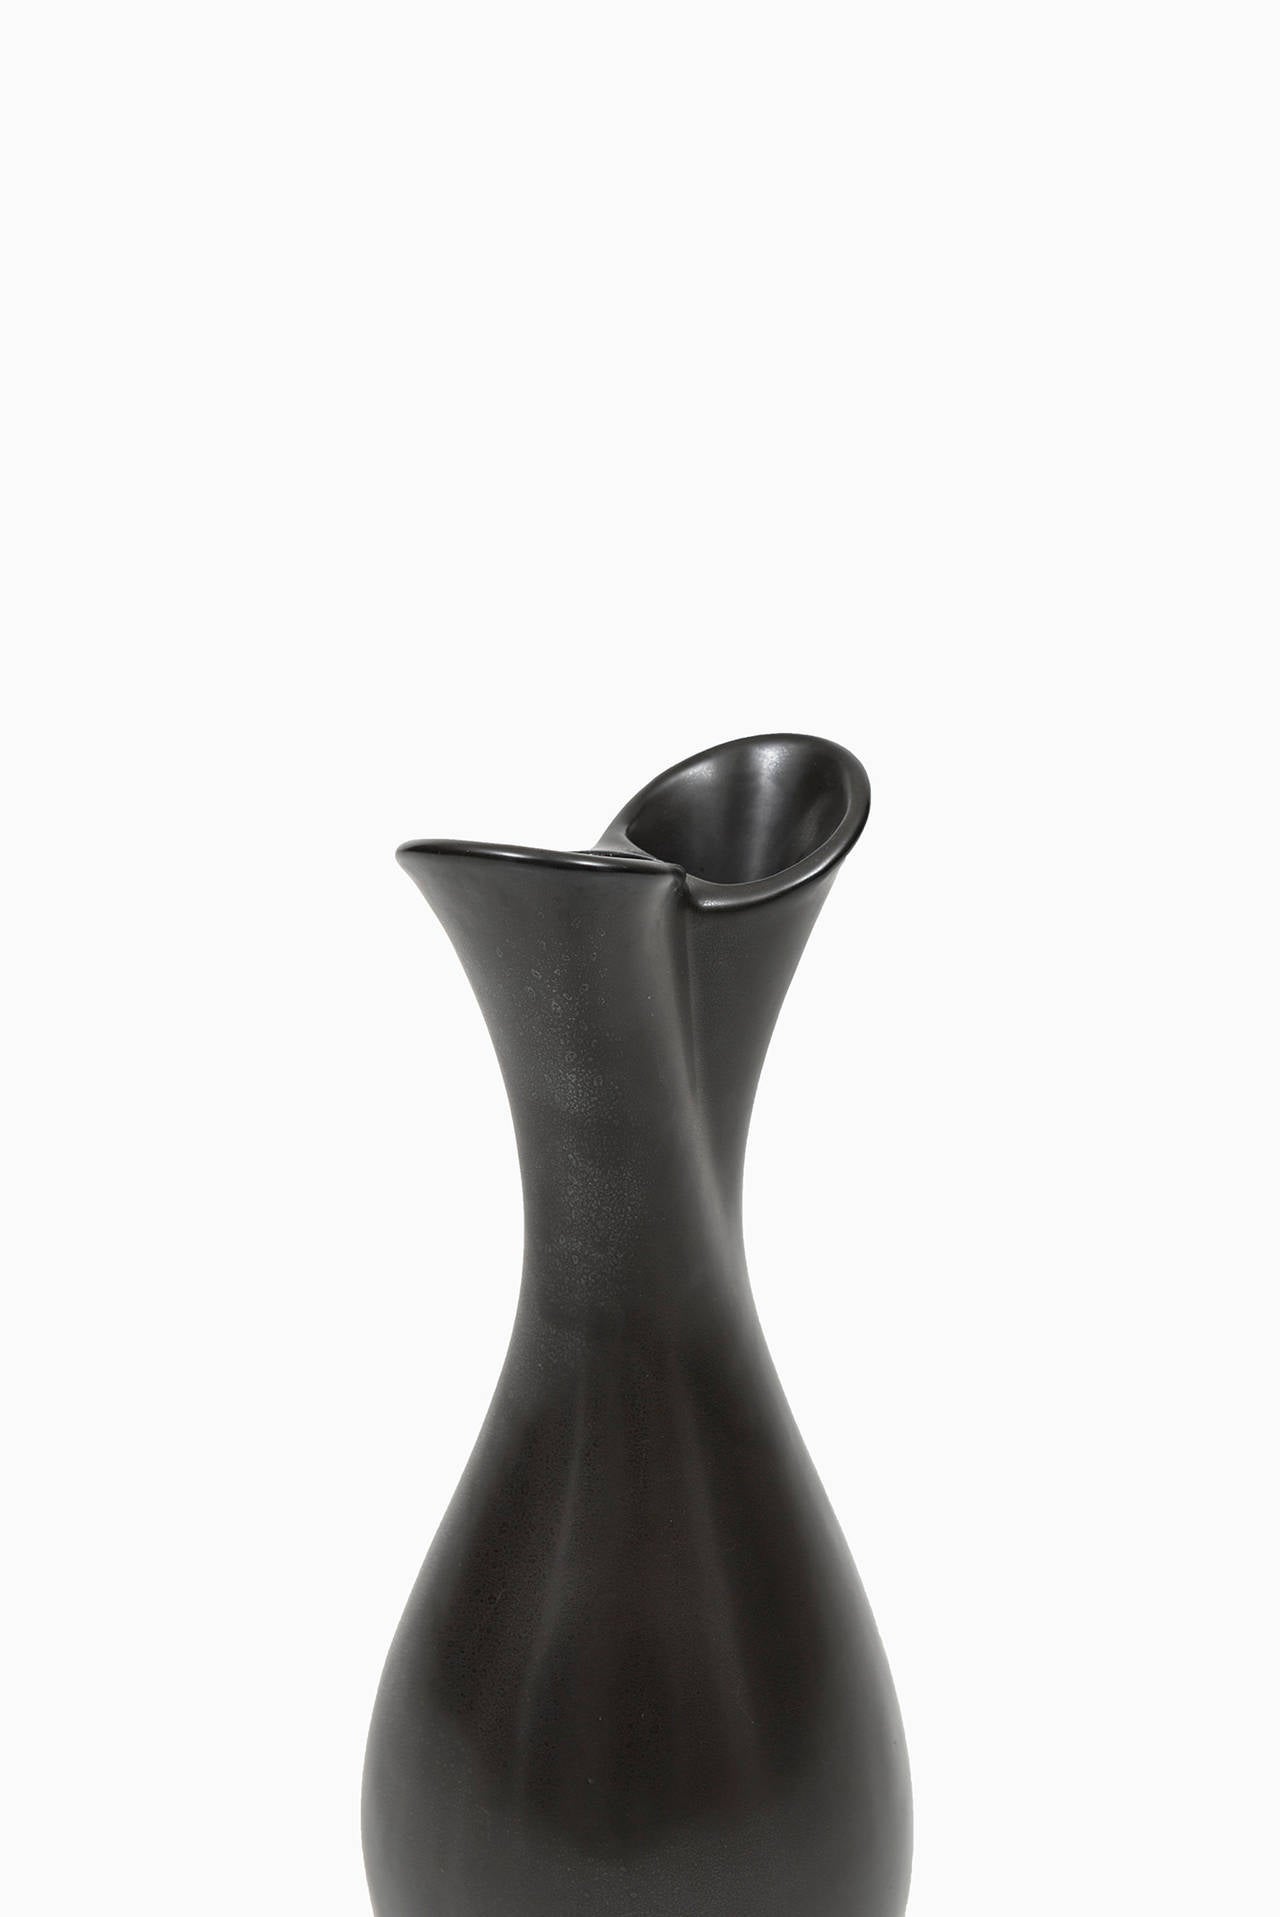 Rare floor vase model Mangania designed by Lillemor Mannerheim. Produced by Gefle porcelain factory in Sweden.